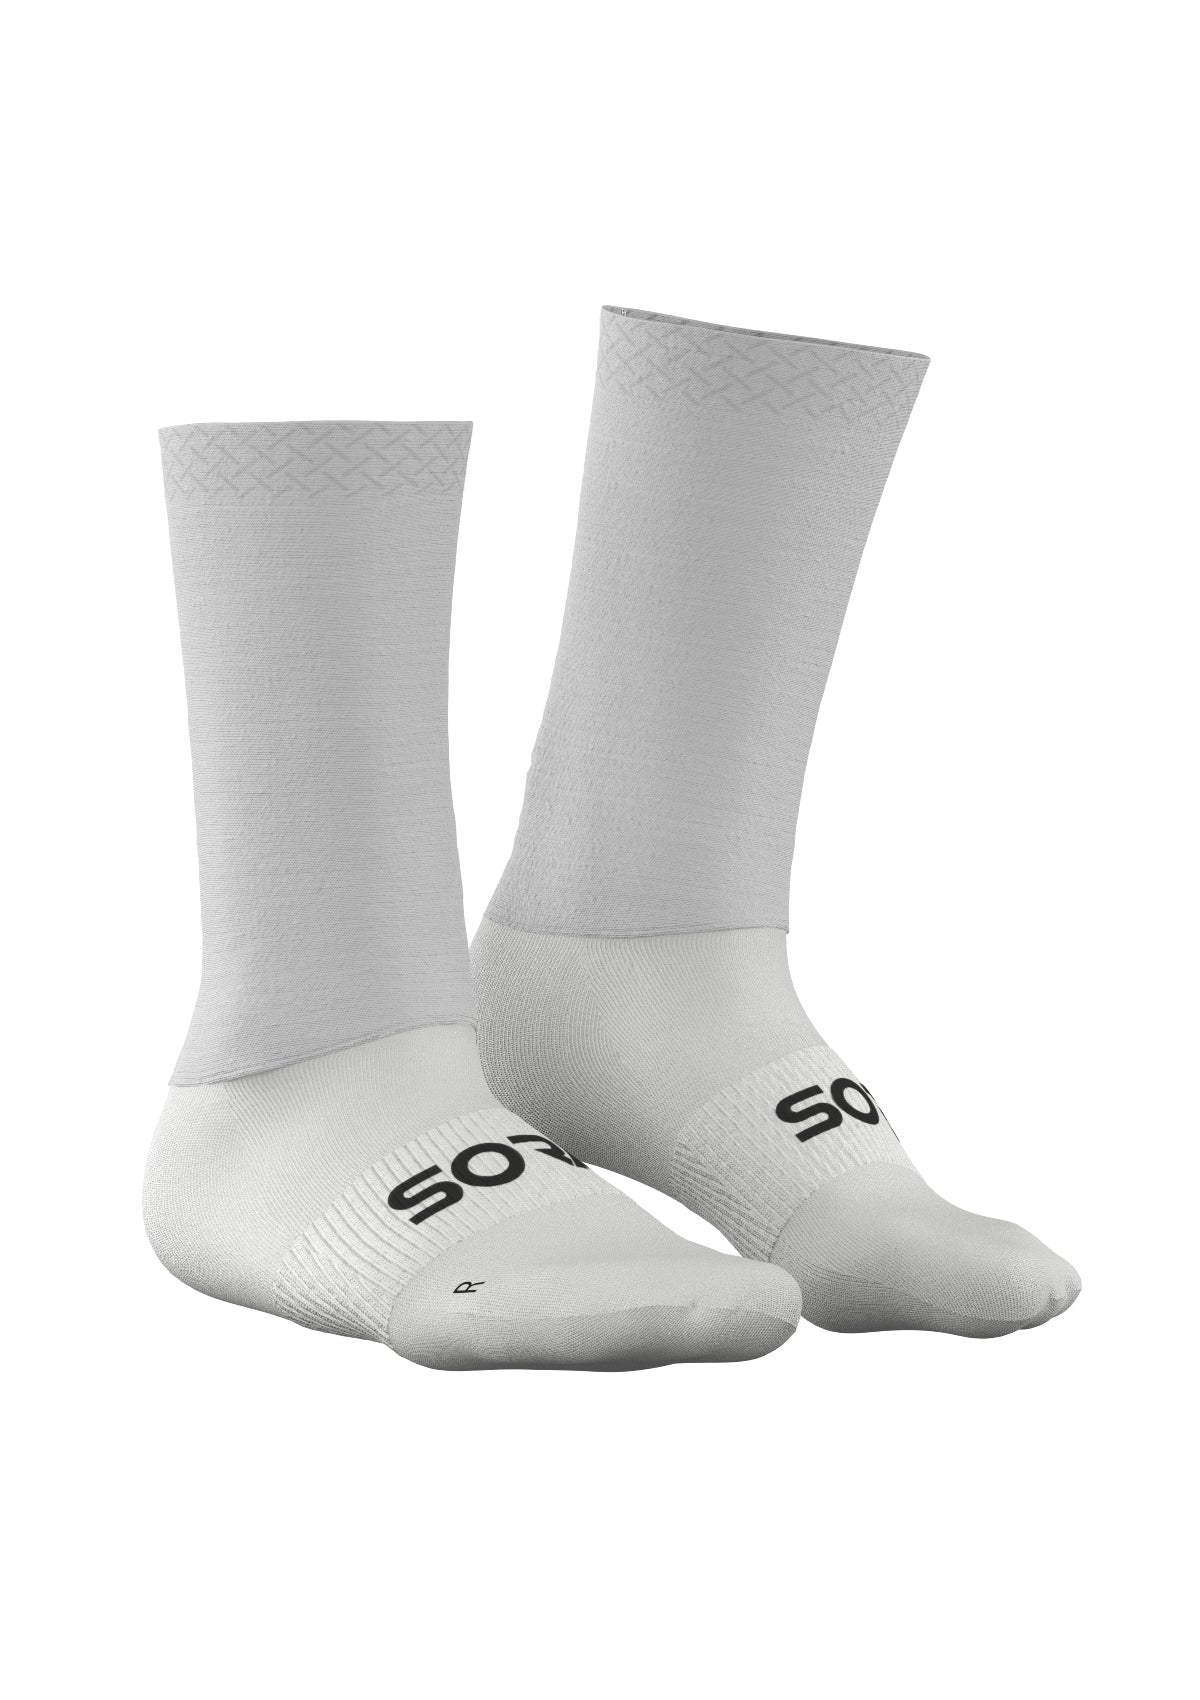 Aero Pro Light White Cycling Socks